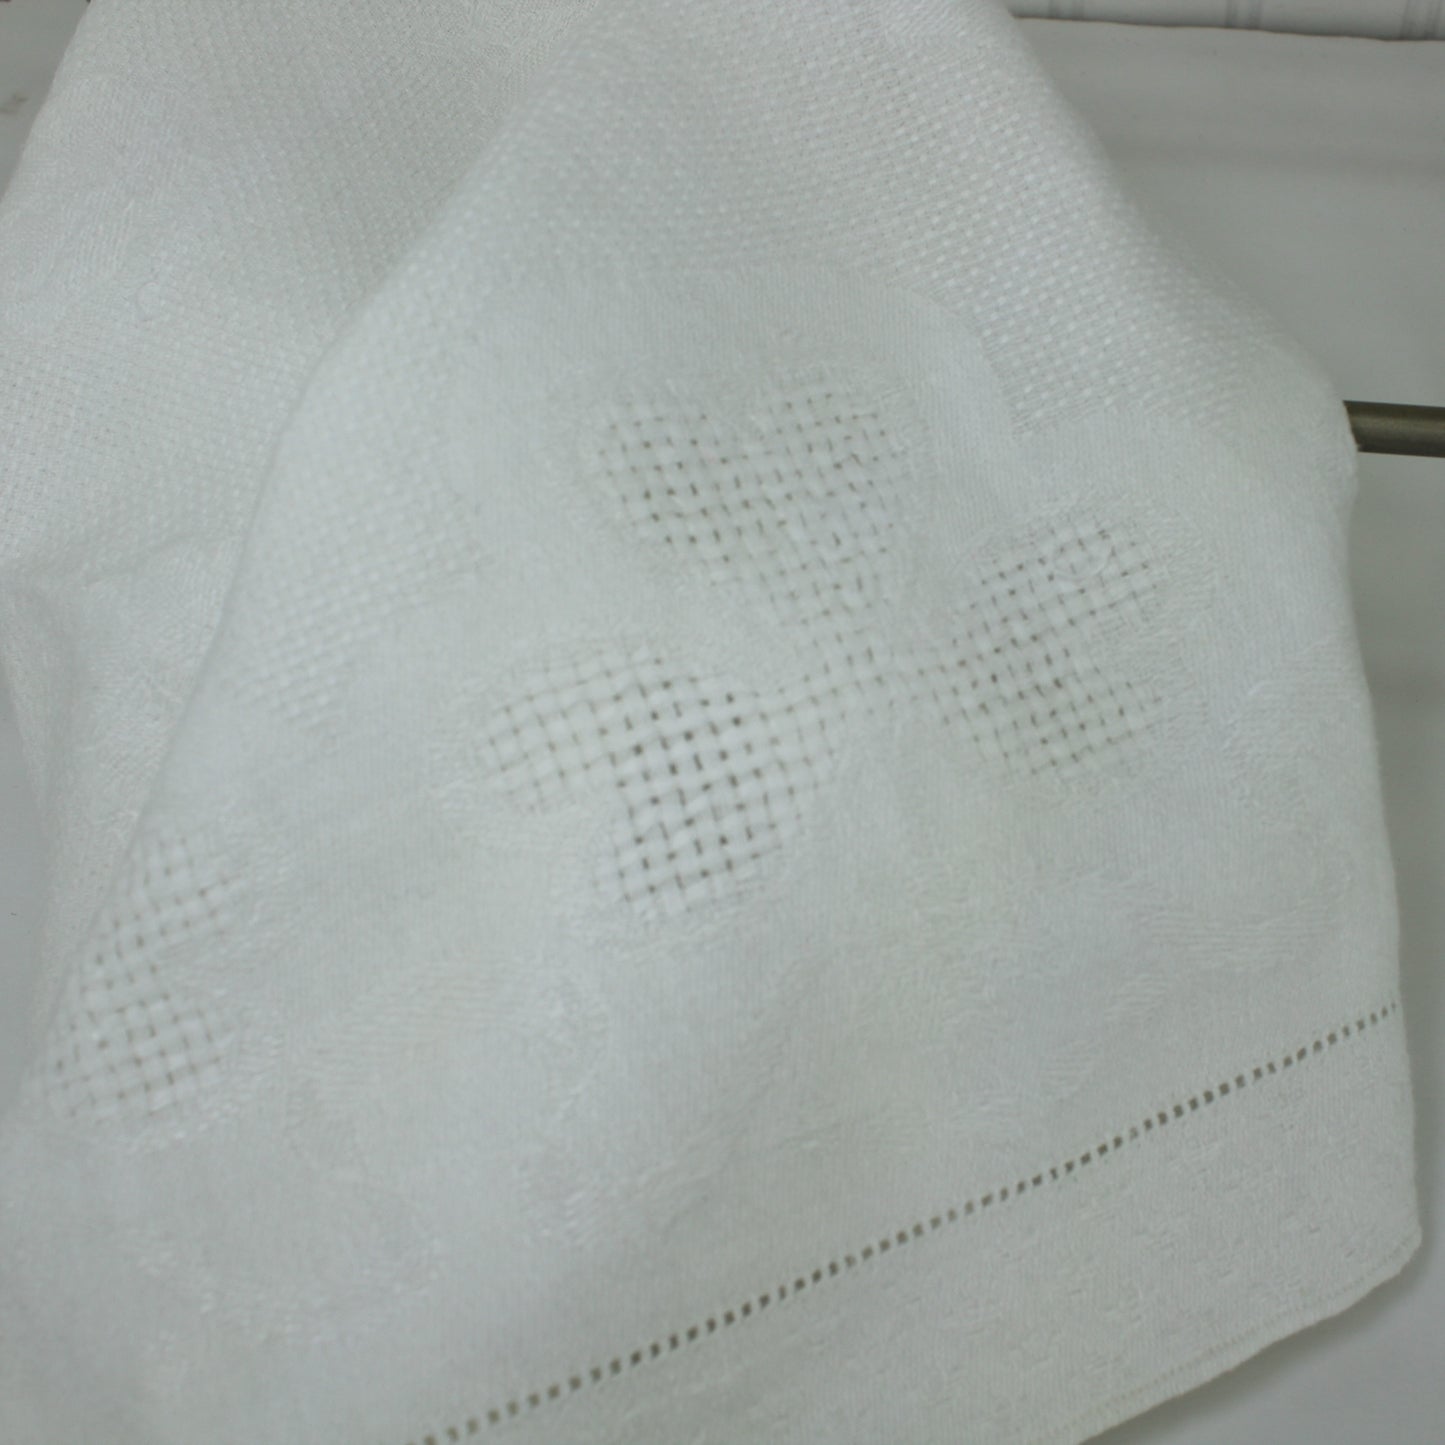 Collection 4 Antique Linens Towels Tatting Damask Openwork CloverleafDIY Repurpose 3 cloverleaf design